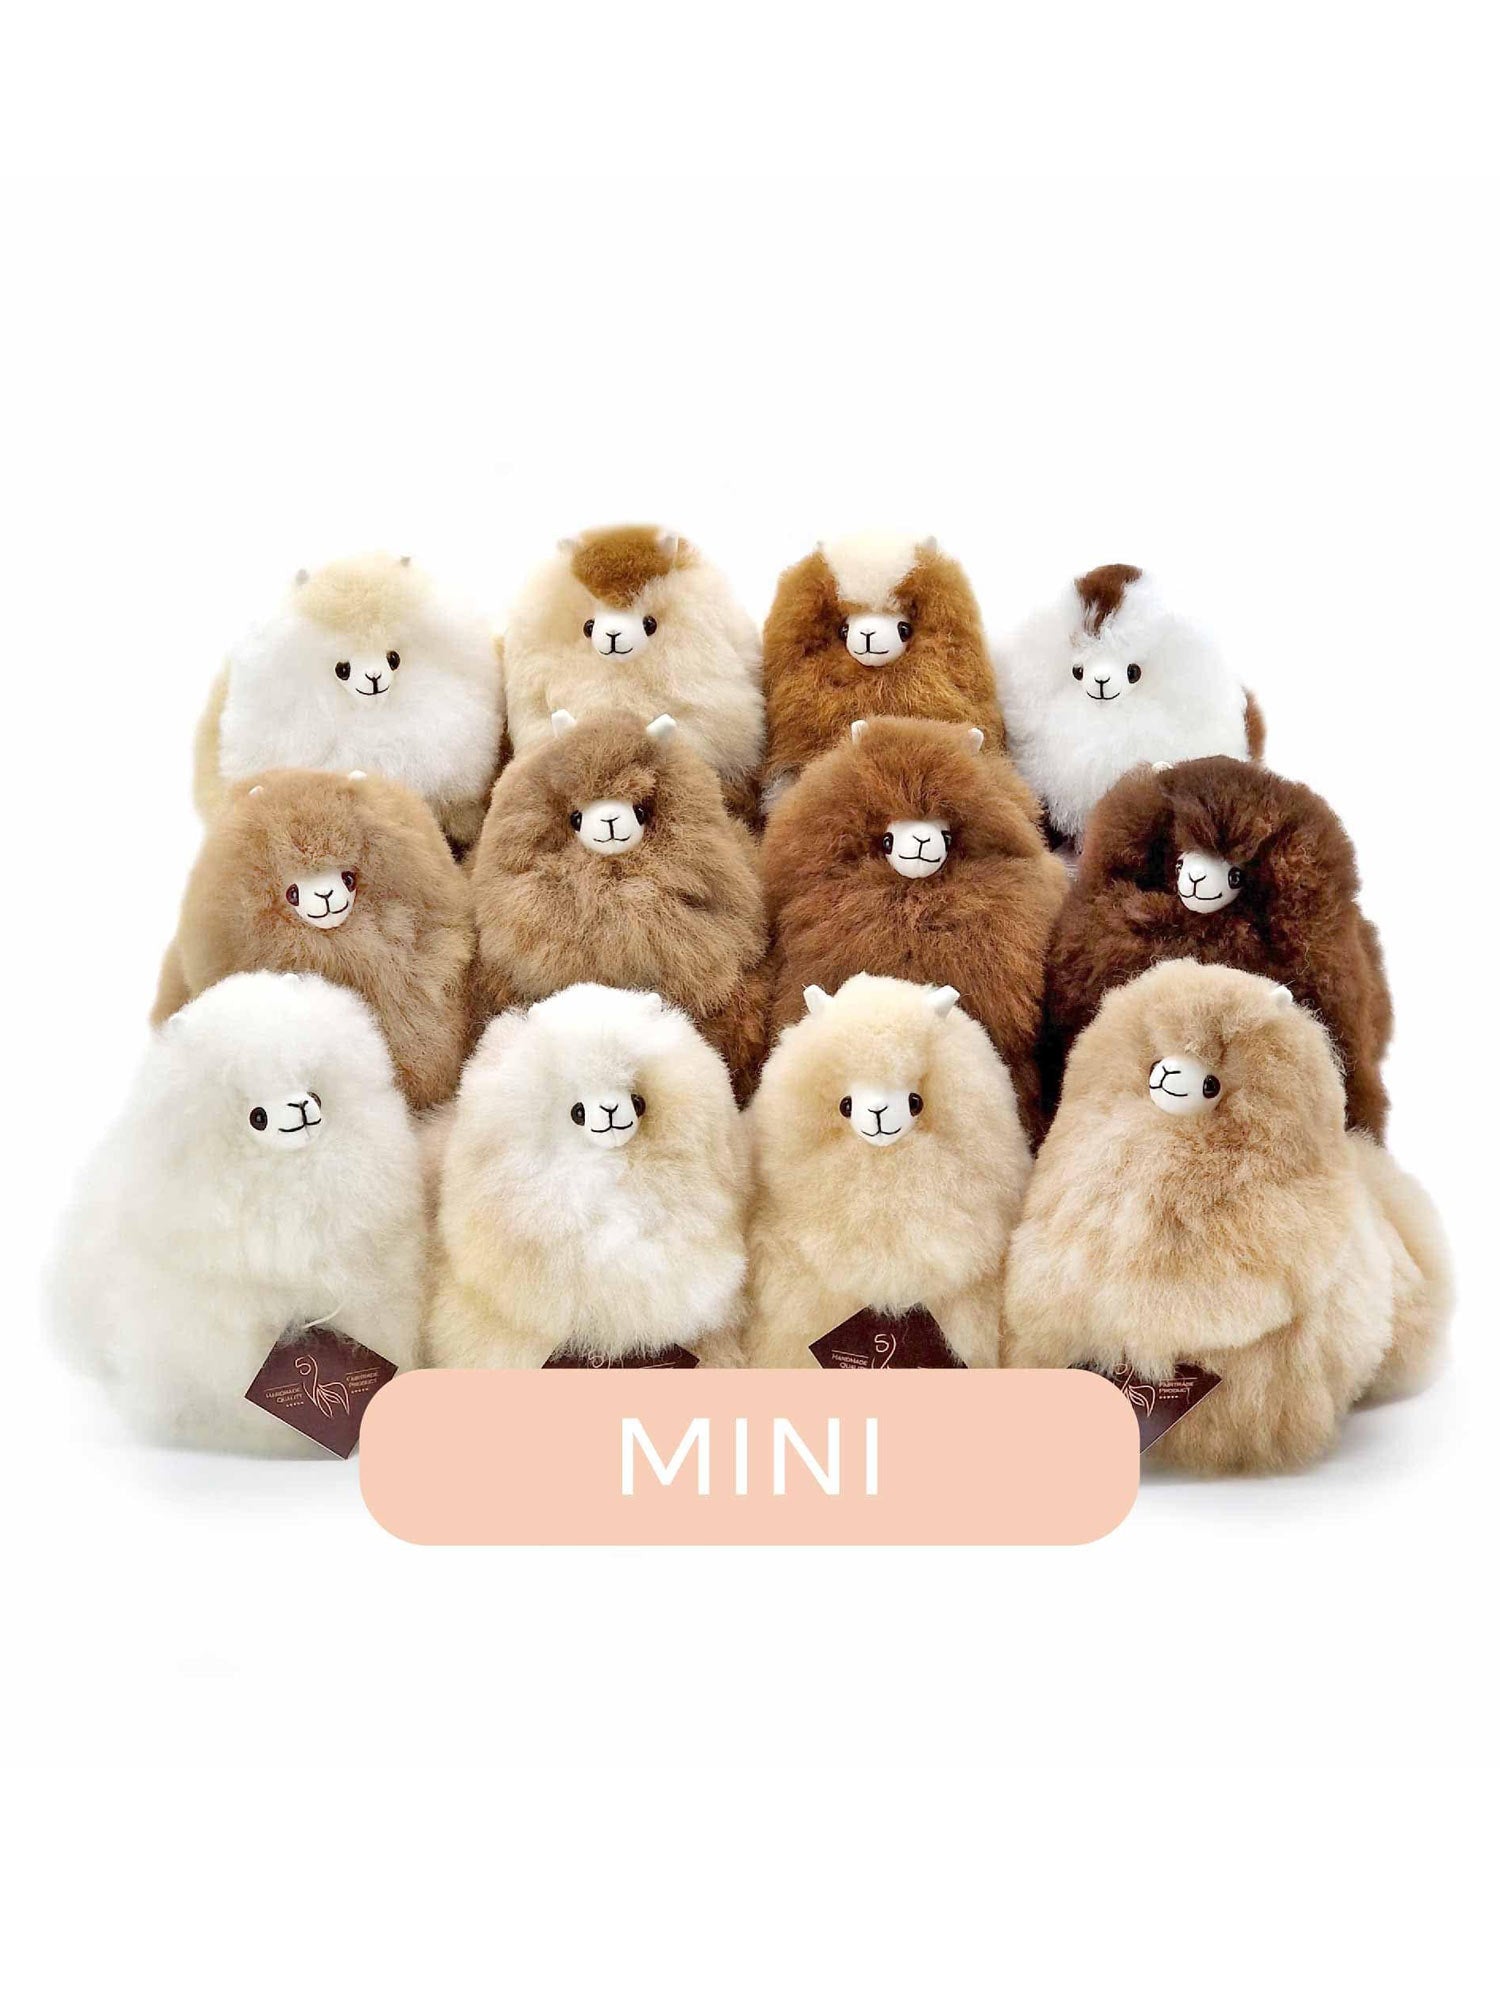 Inkari Alpaca soft toy Naturals - Blond-Mini 15cm